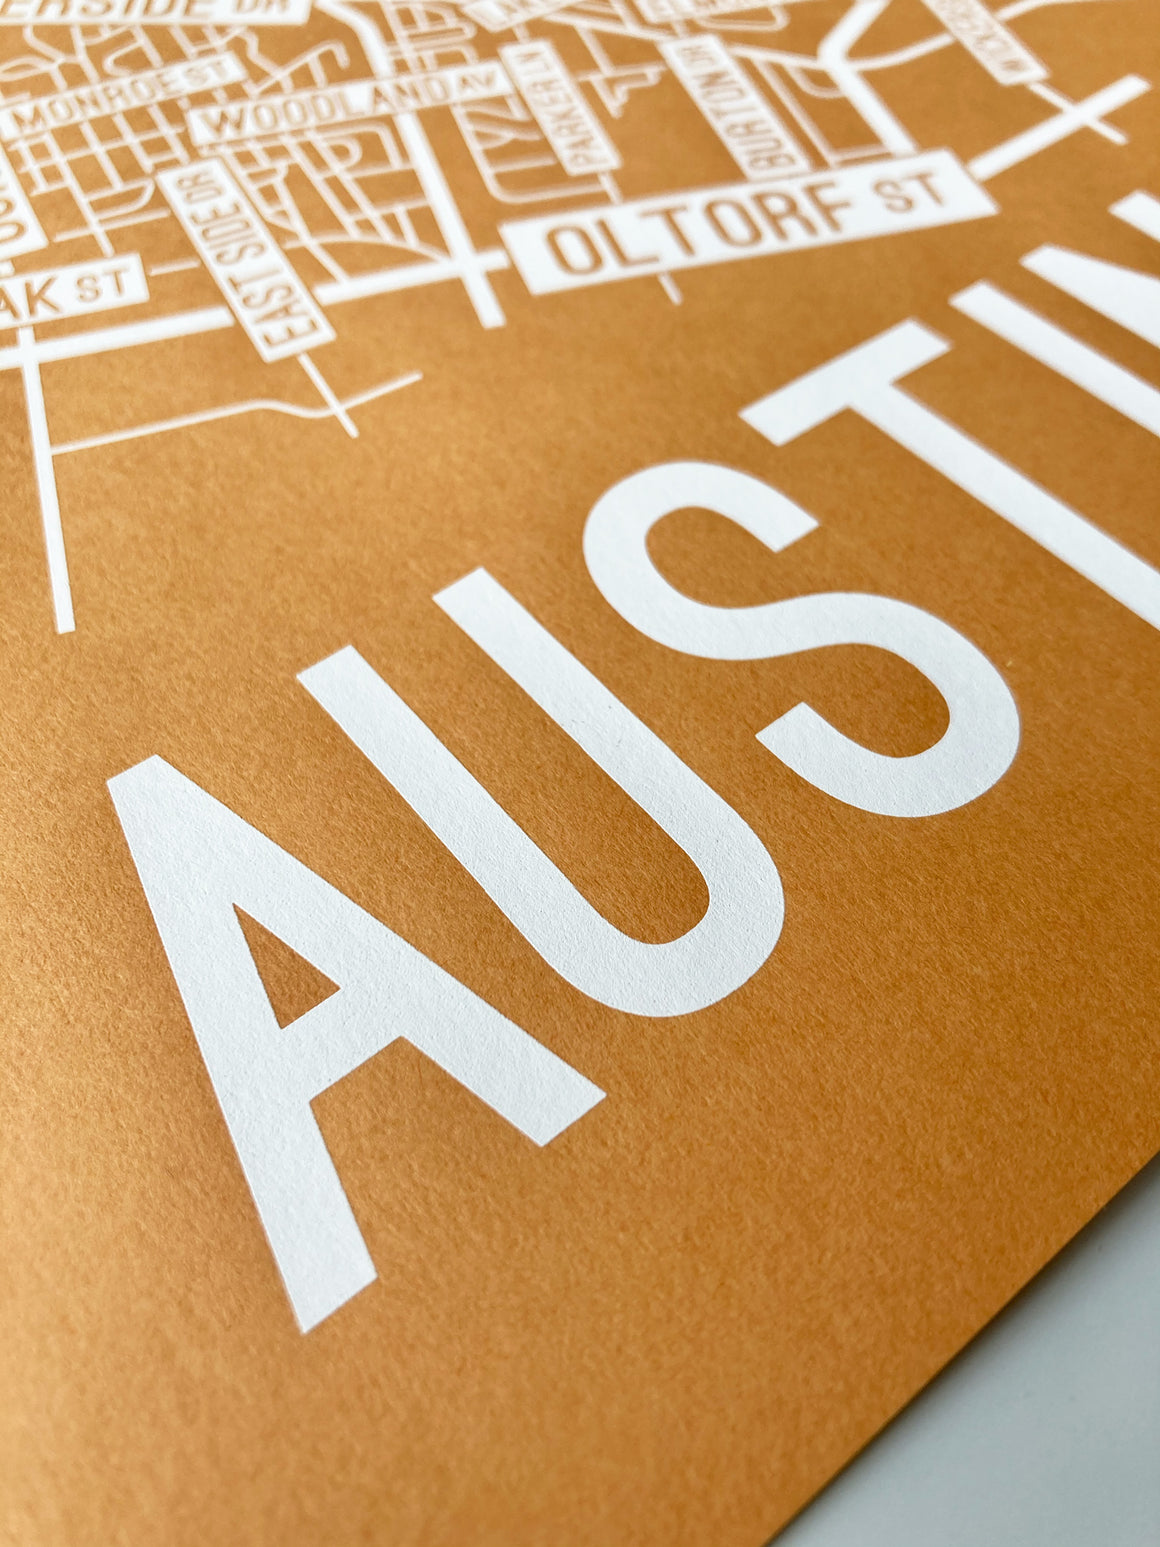 Austin, Texas Street Map Print